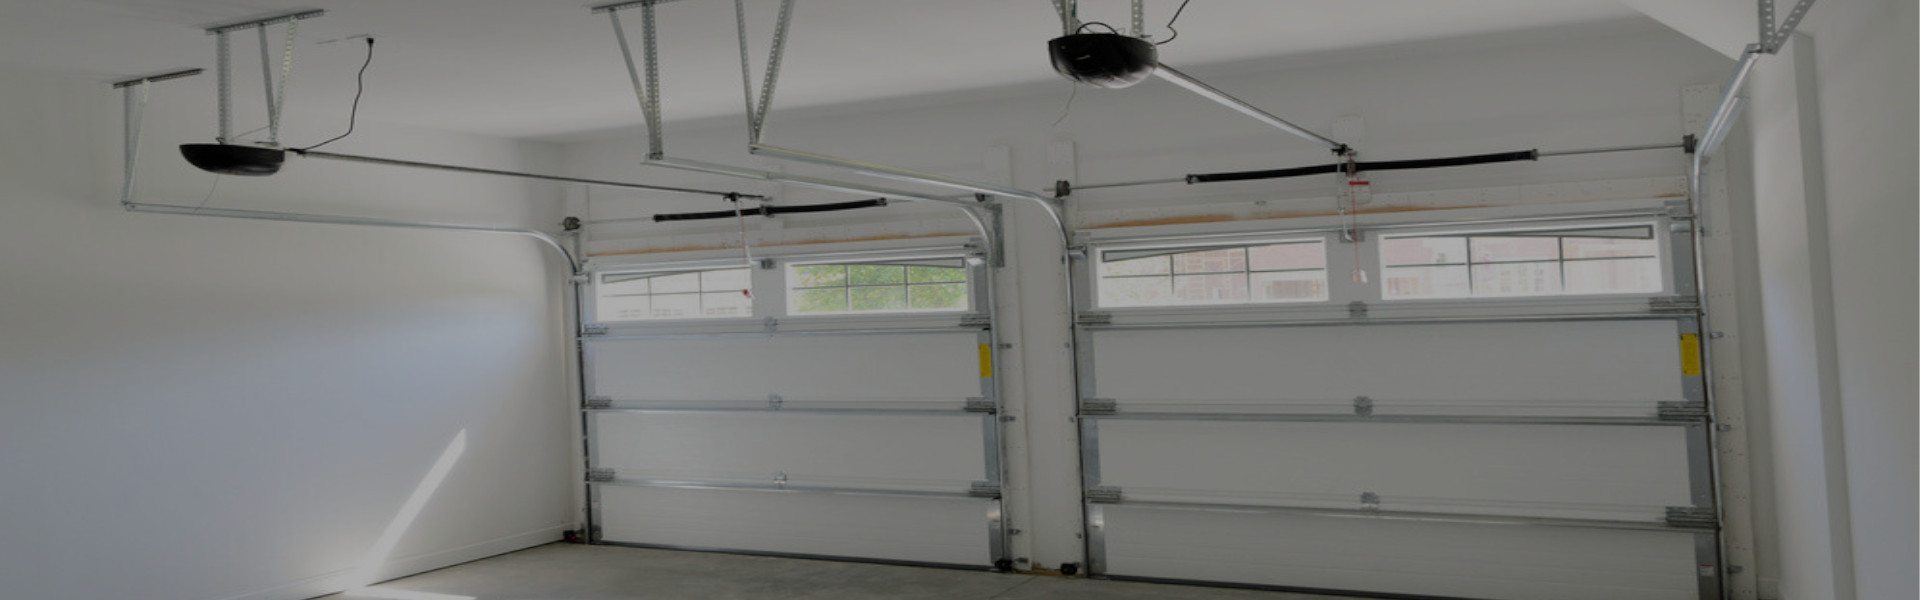 Slider Garage Door Repair, Glaziers in Barnehurst, DA7